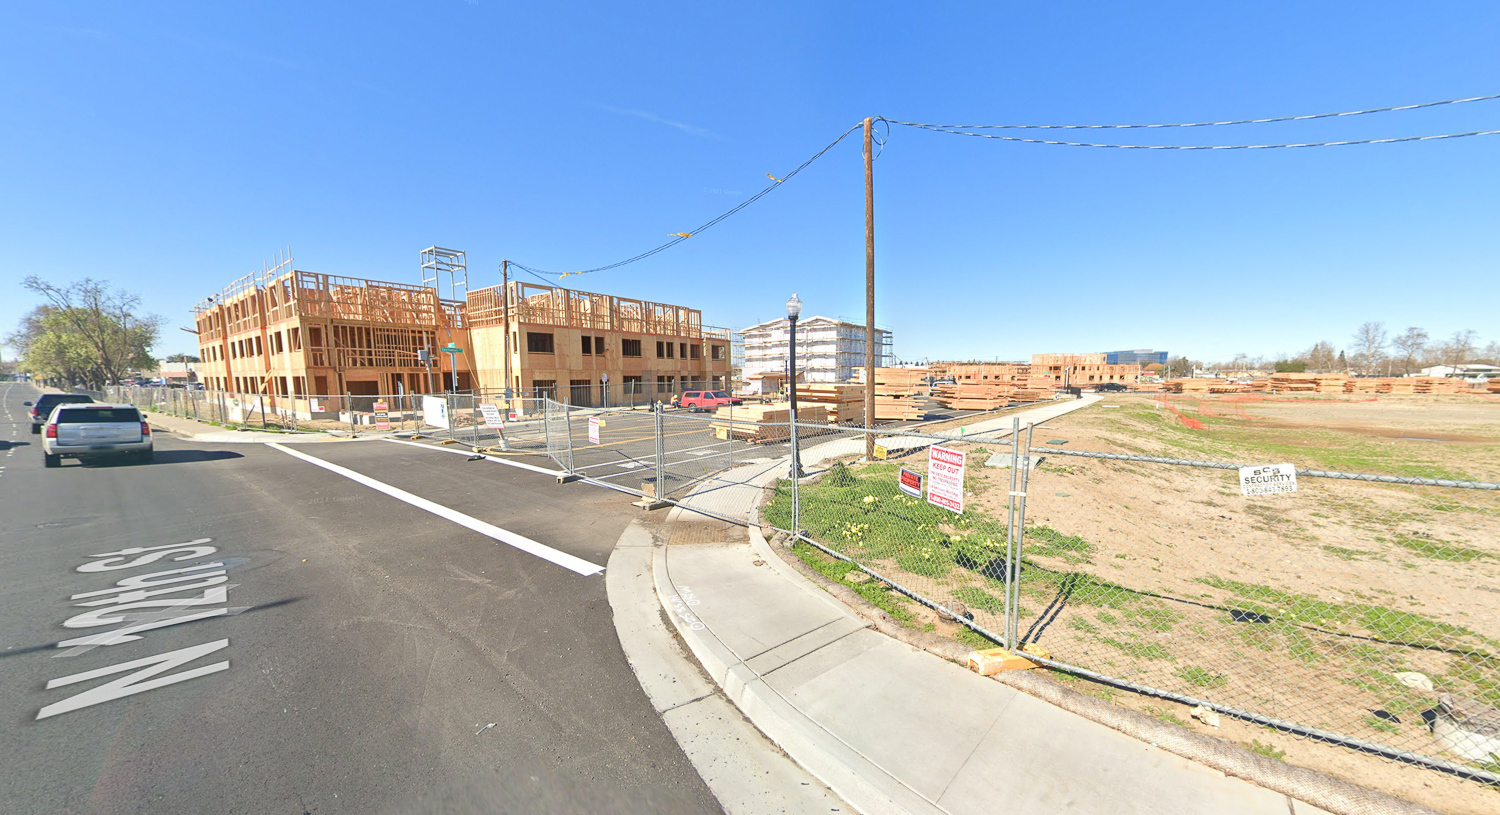 Mirasol Village construction underway, image via Google Street View circa February 2021